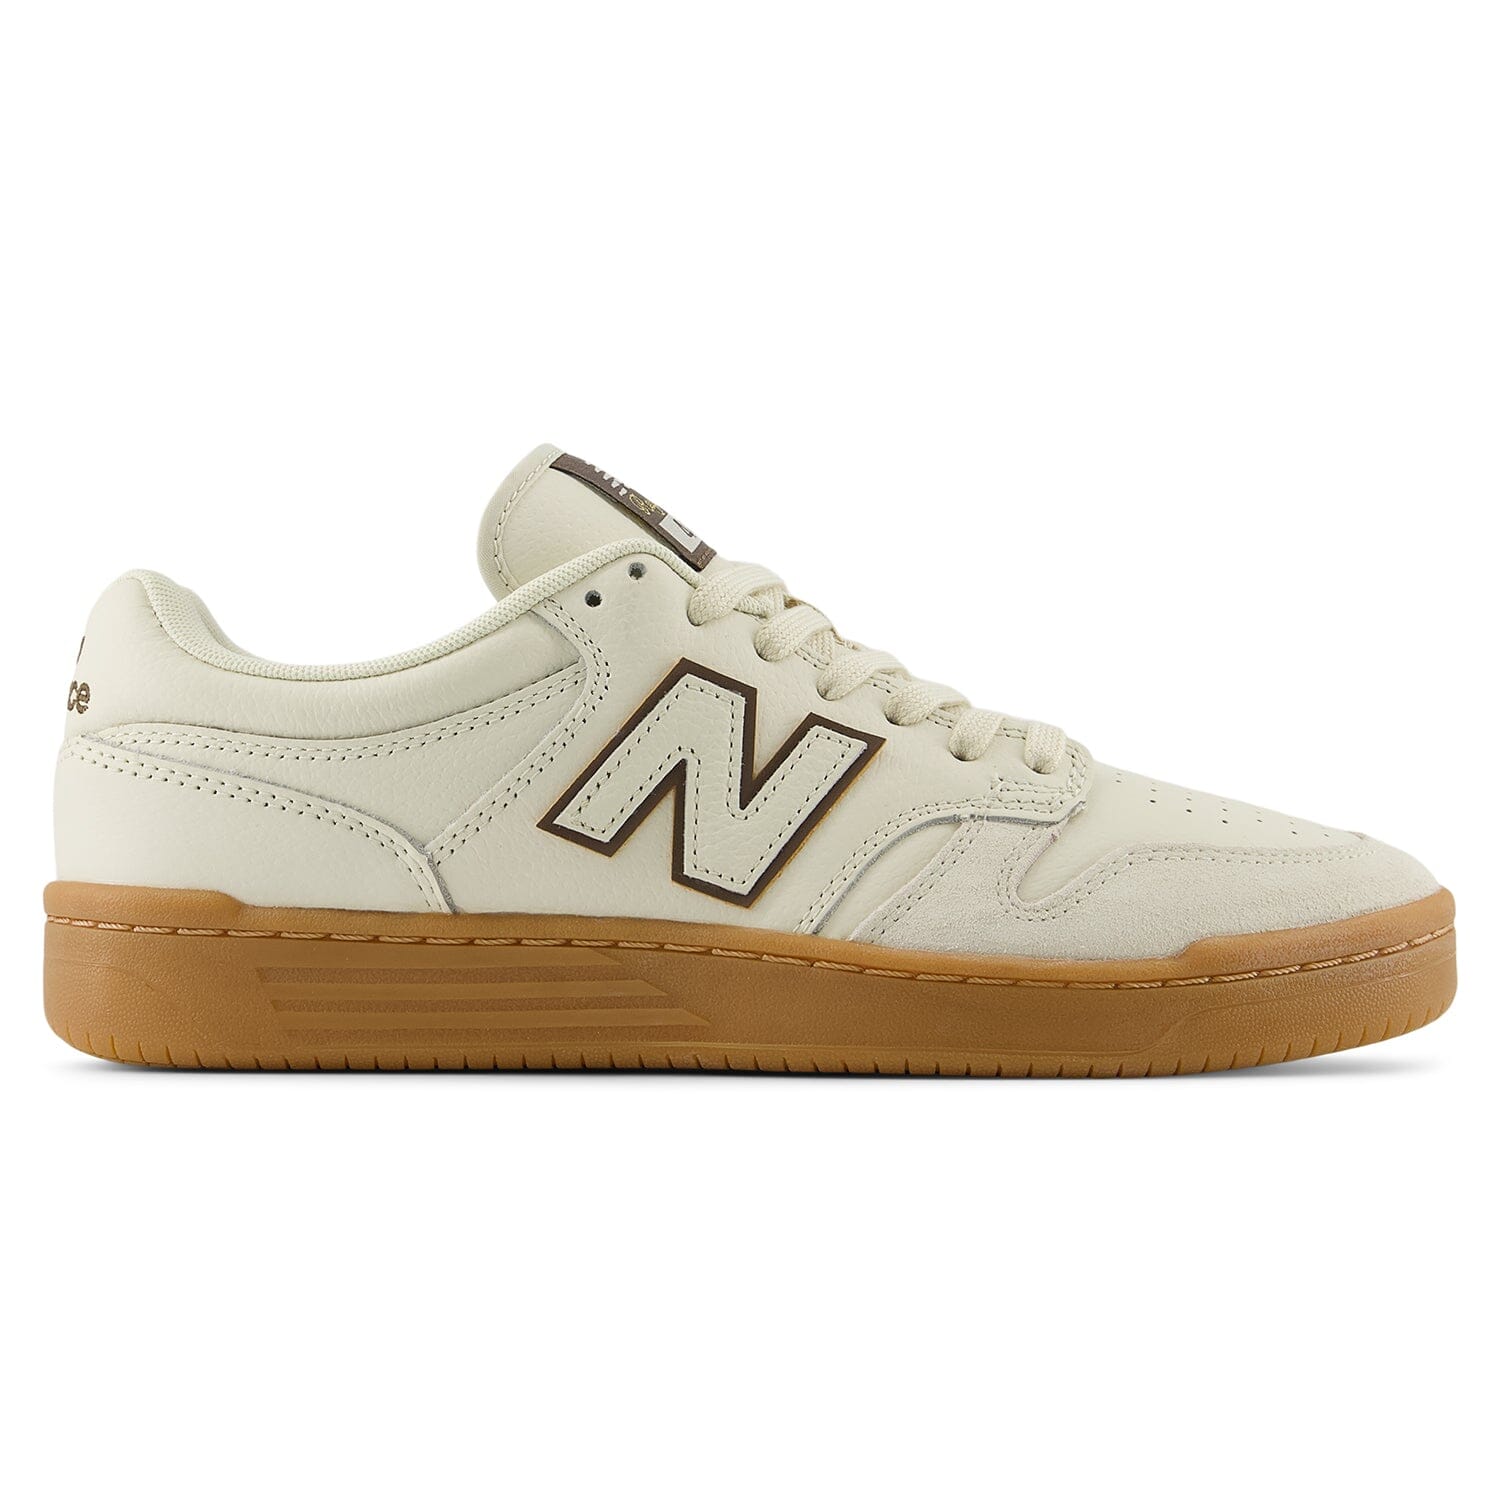 New Balance Numeric NM480 Reynolds Sea Salt/Gum footwear New Balance Numeric 